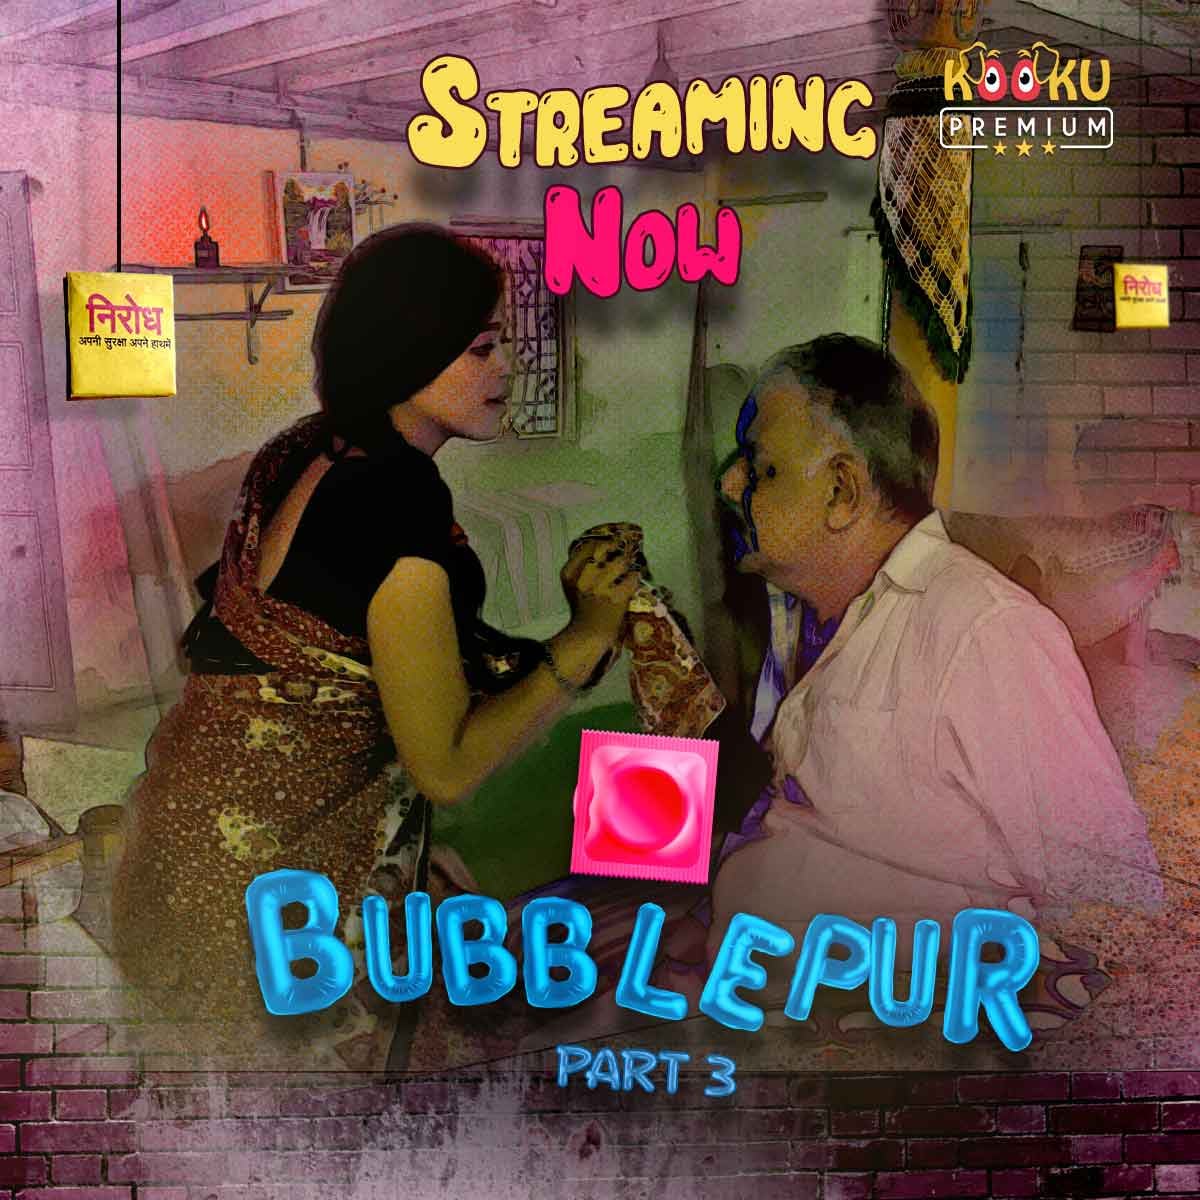 Bubblepur Part 3 2021 Hindi Kooku Originals Web Series 720p HDRip 100MB Download